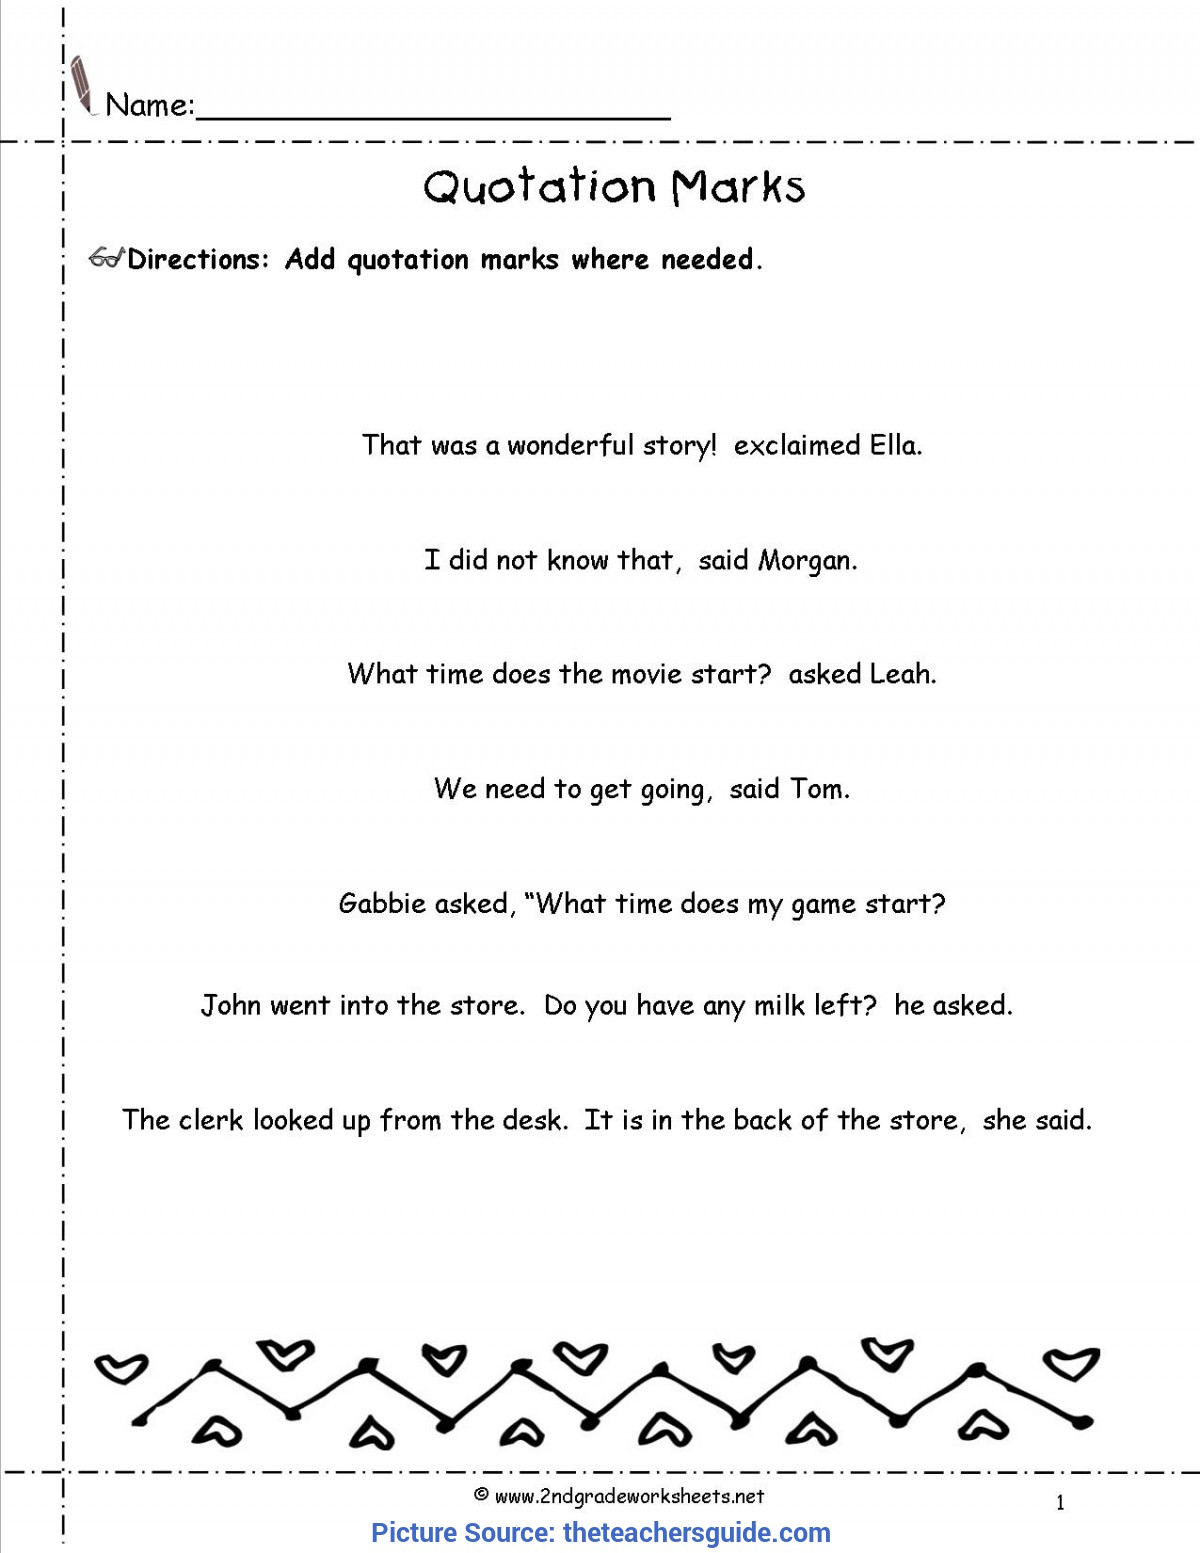 Dialogue - Quotation Marks - Mrs. Warner&amp;#039;s 4Th Grade C - Ota